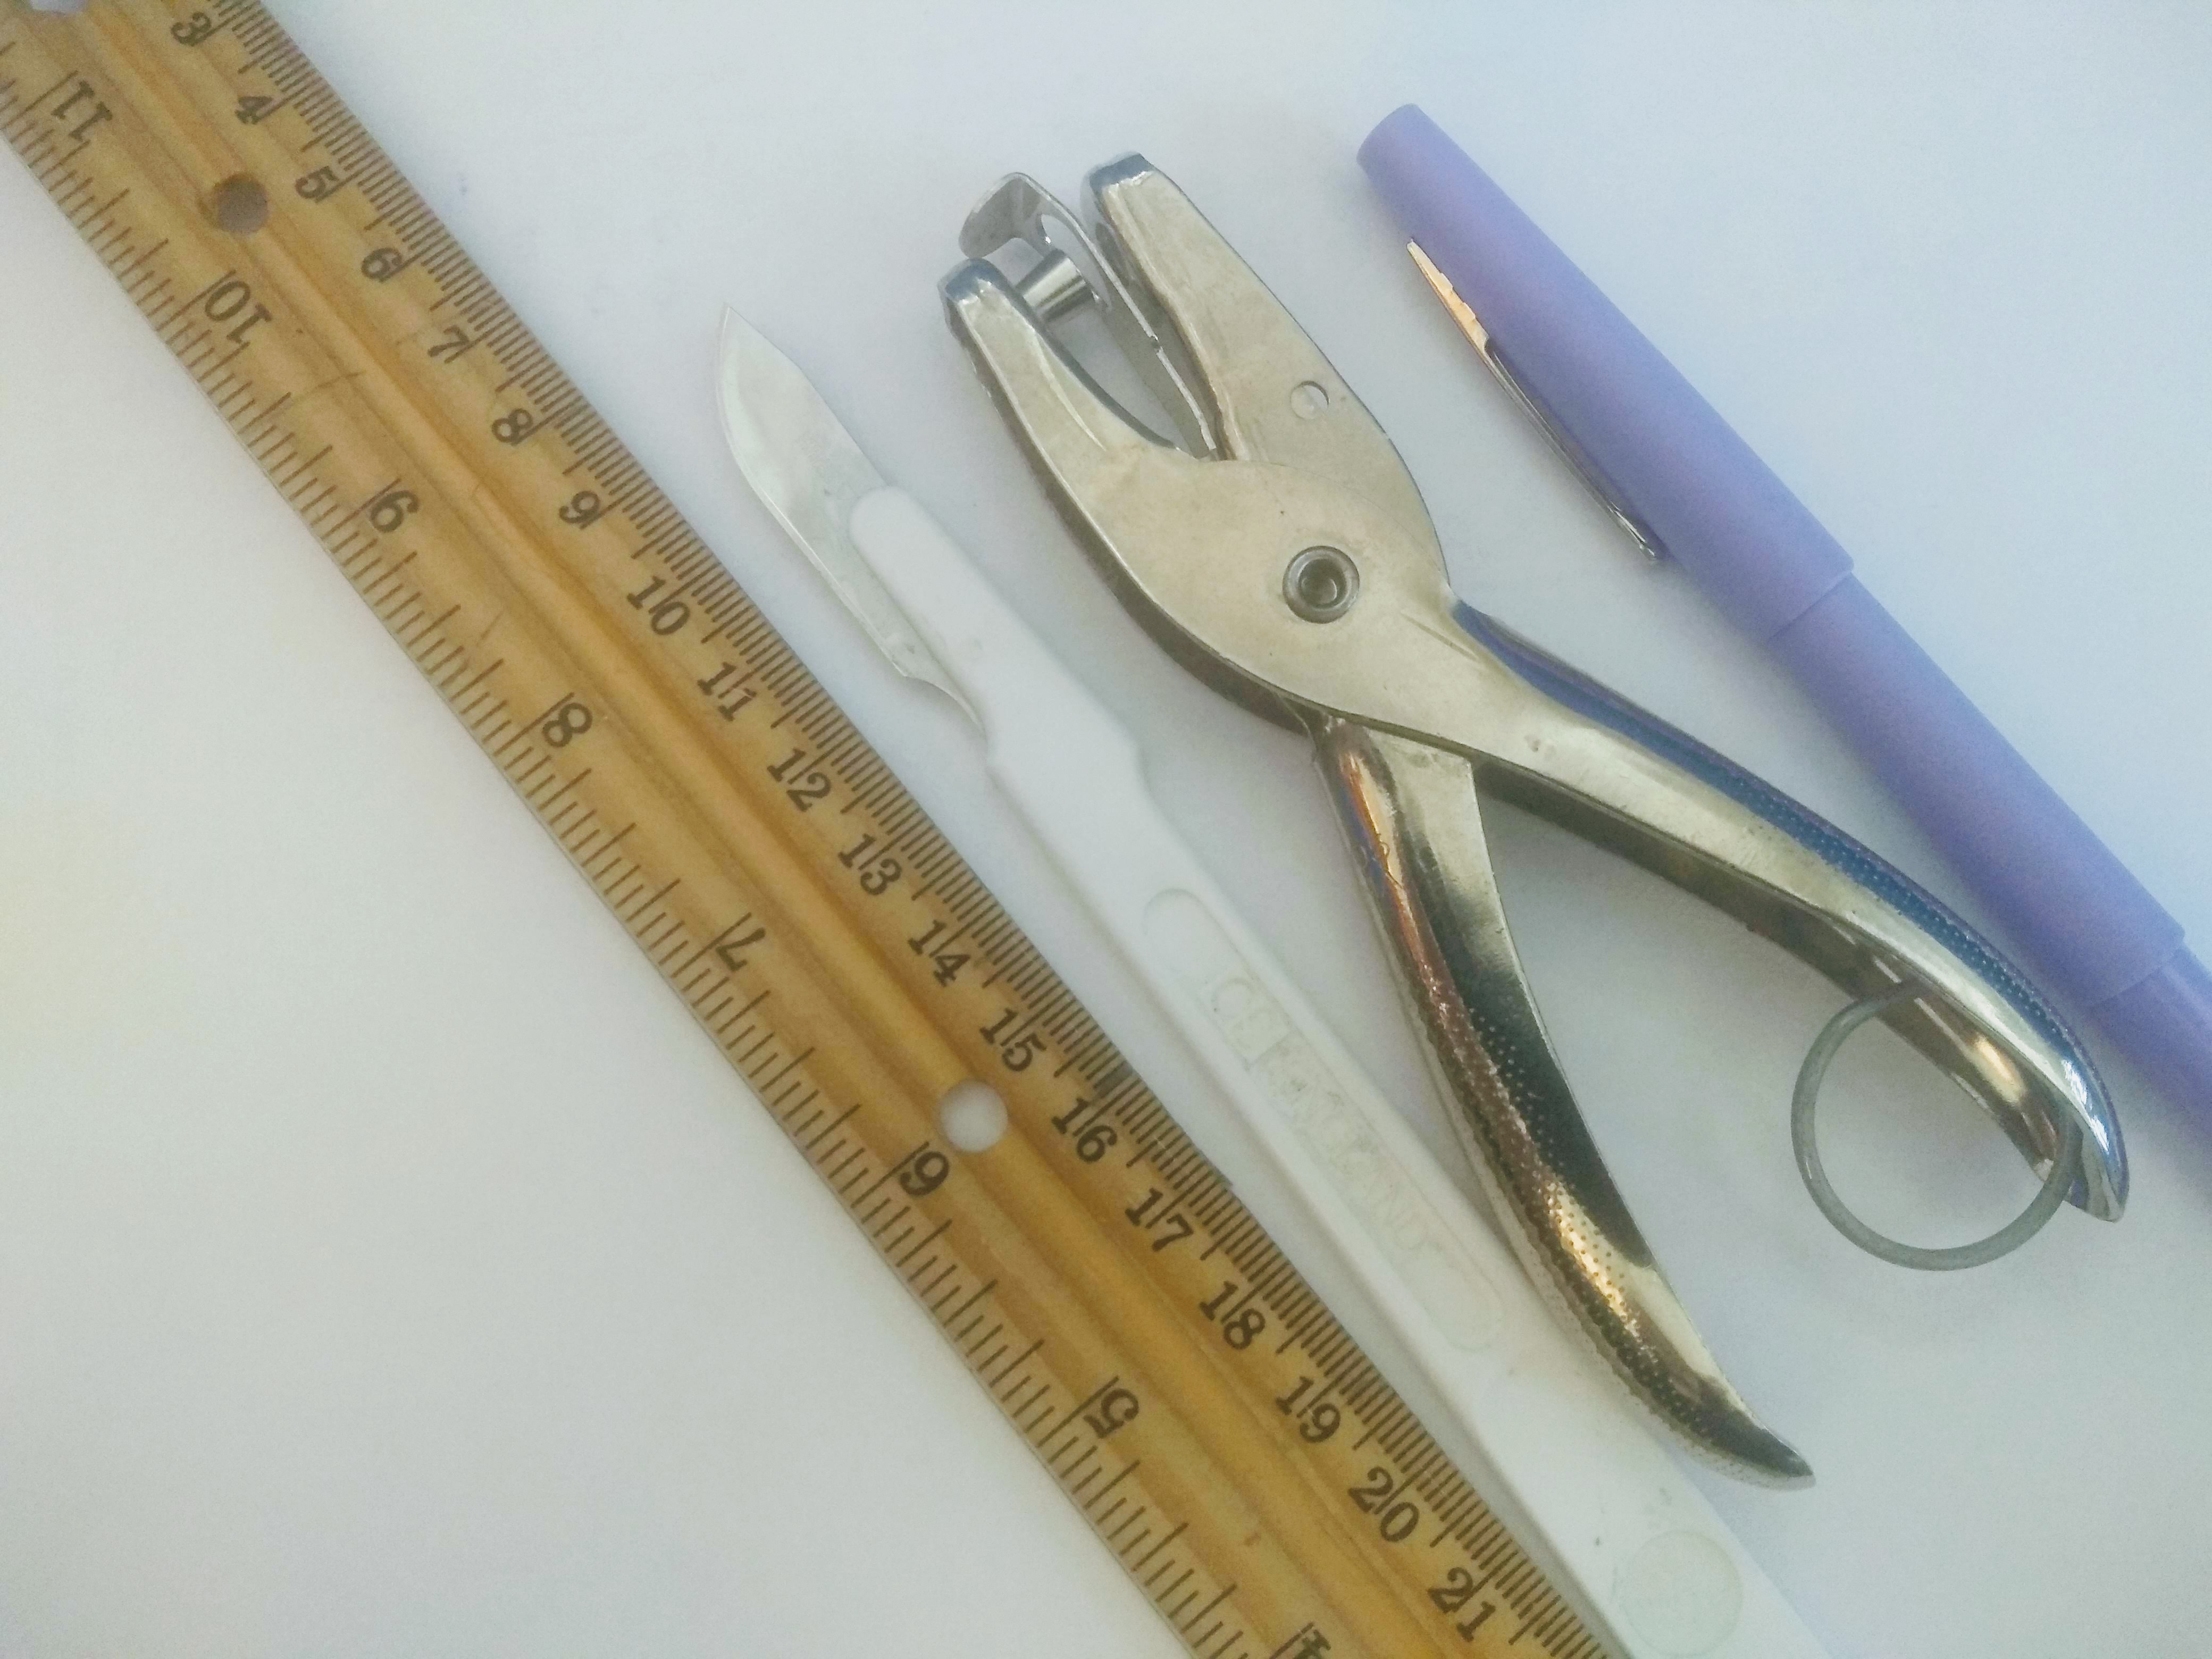 Hole punch answer key sheet grading ruler scalpel pen